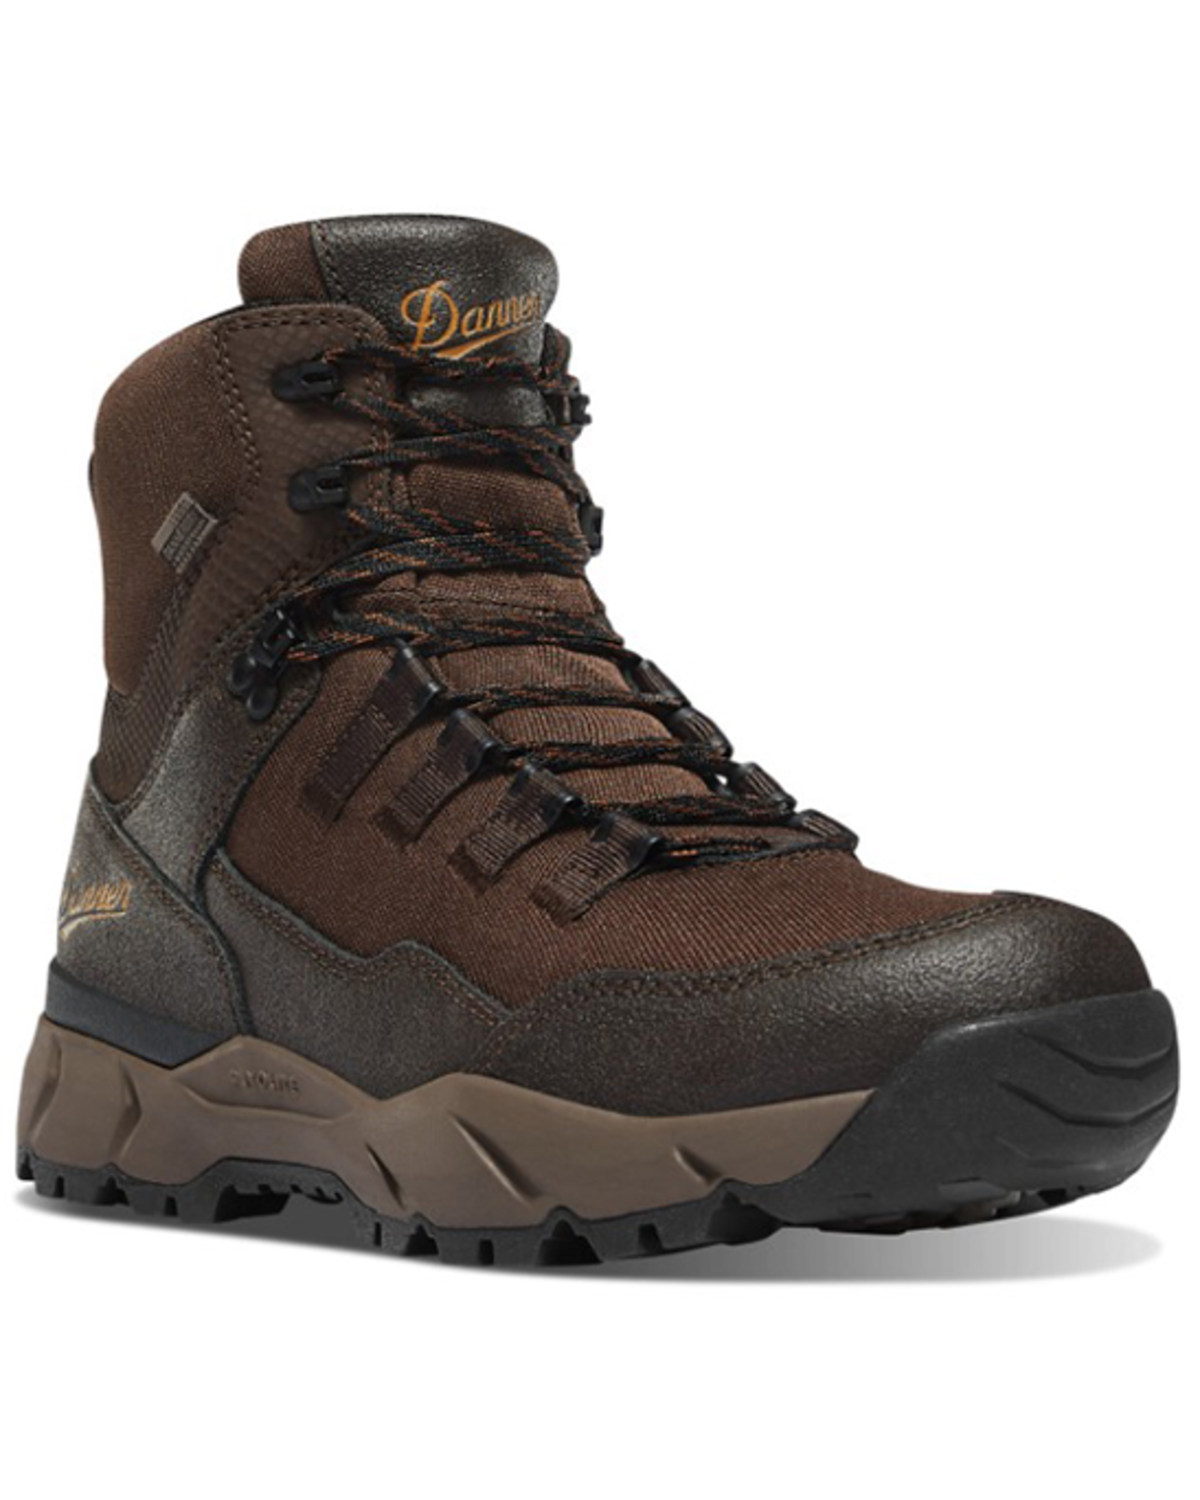 Danner Men's Vital Waterproof Hiking Boots - Soft Toe